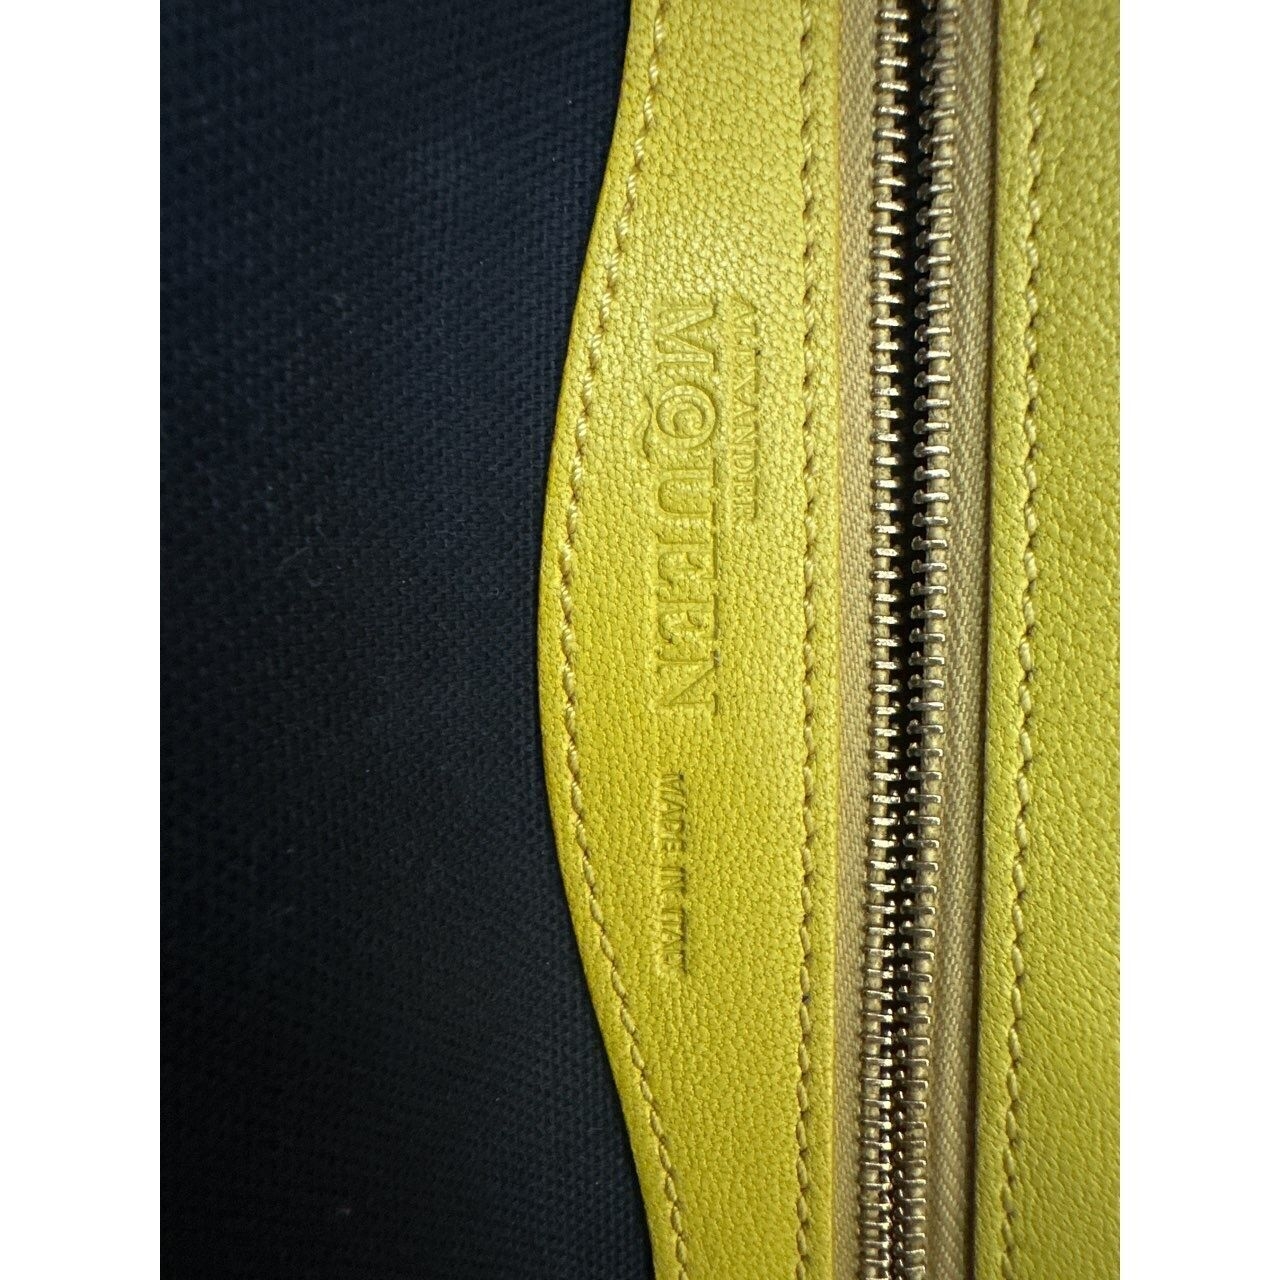 Alexander McQueen Yellow & Caramel Handbag